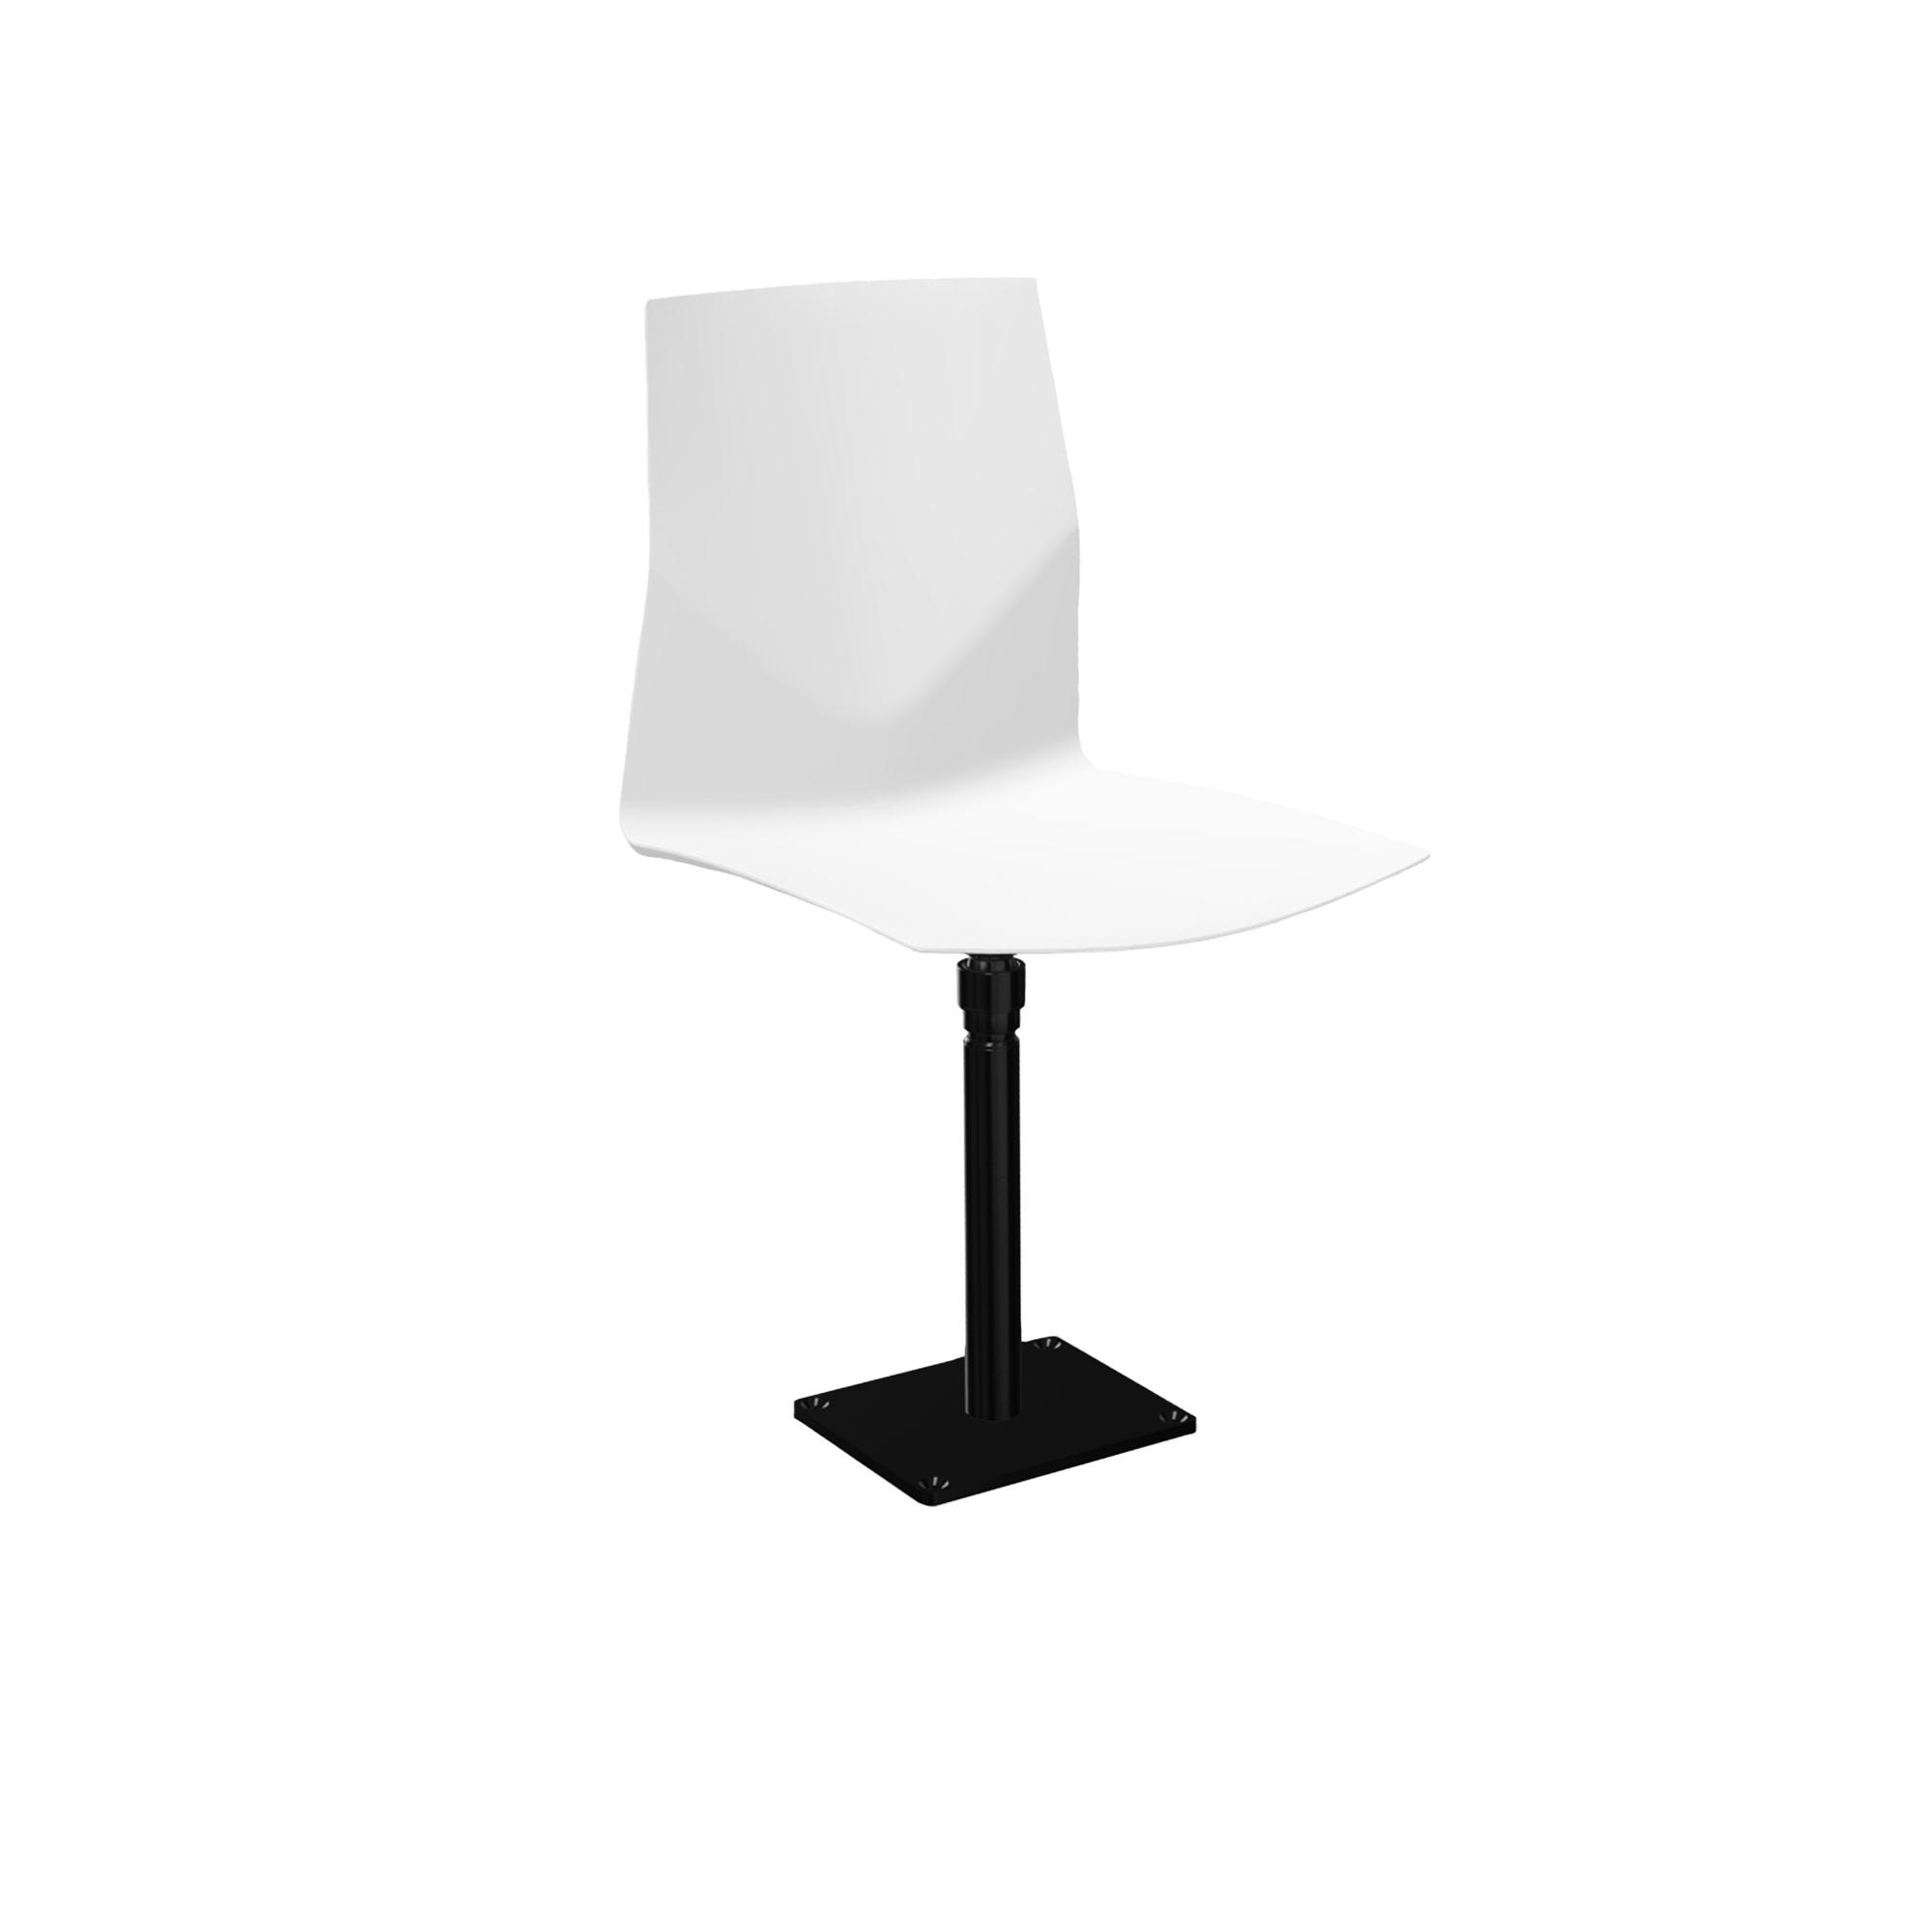 White swivel chair with a black pedestal leg